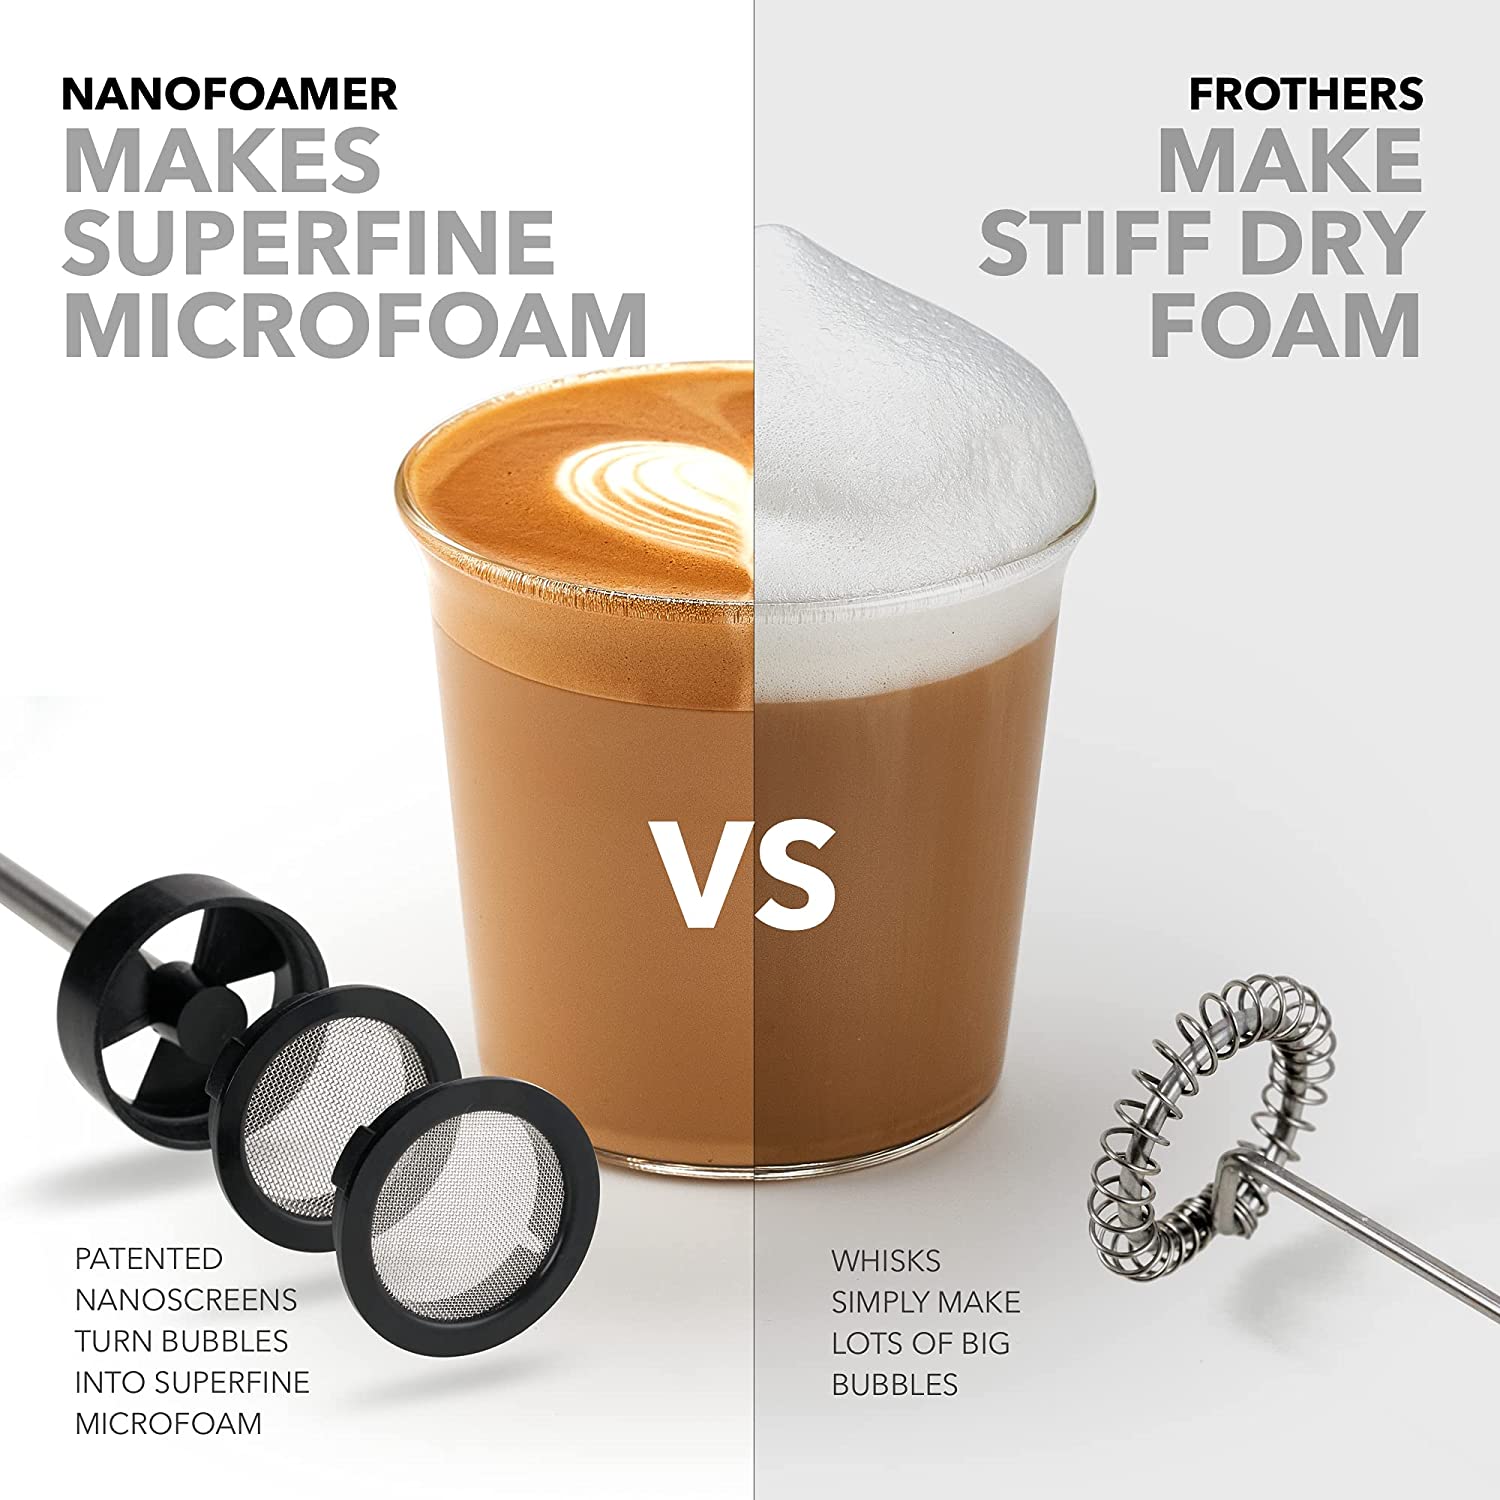 Subminimal NanoFoamer V2